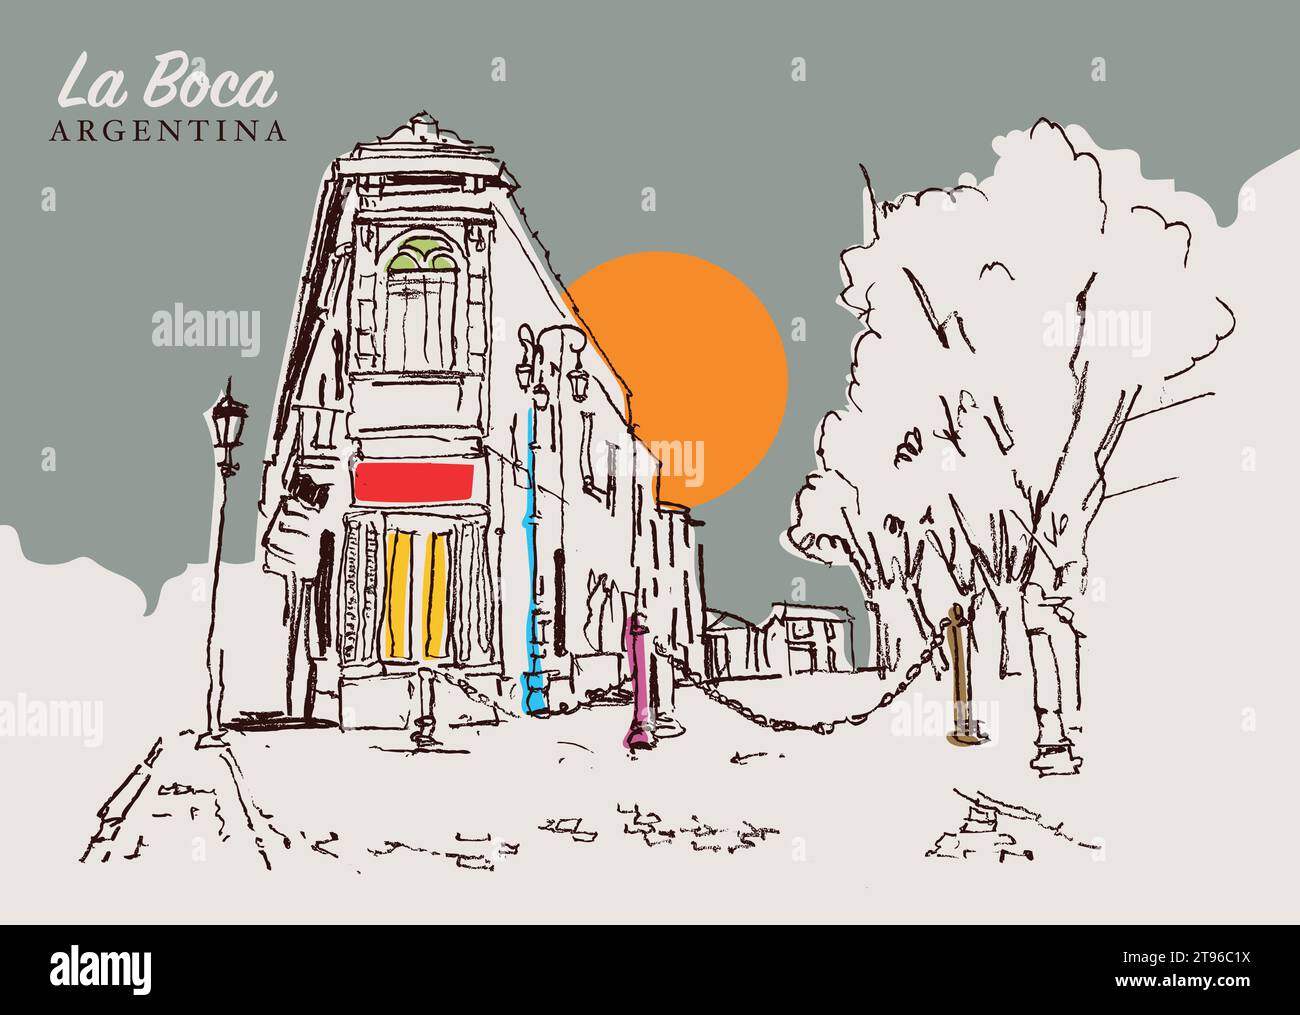 Vector hand drawn sketch illustration of a traditional street in La Boca, Argentina. Stock Vector